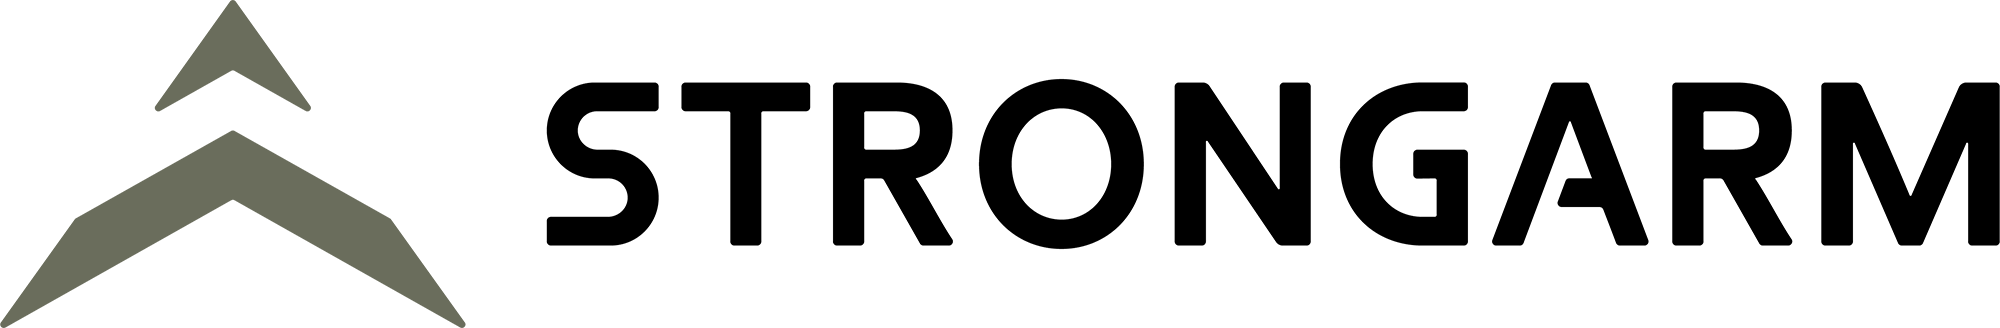 StrongArm Logo